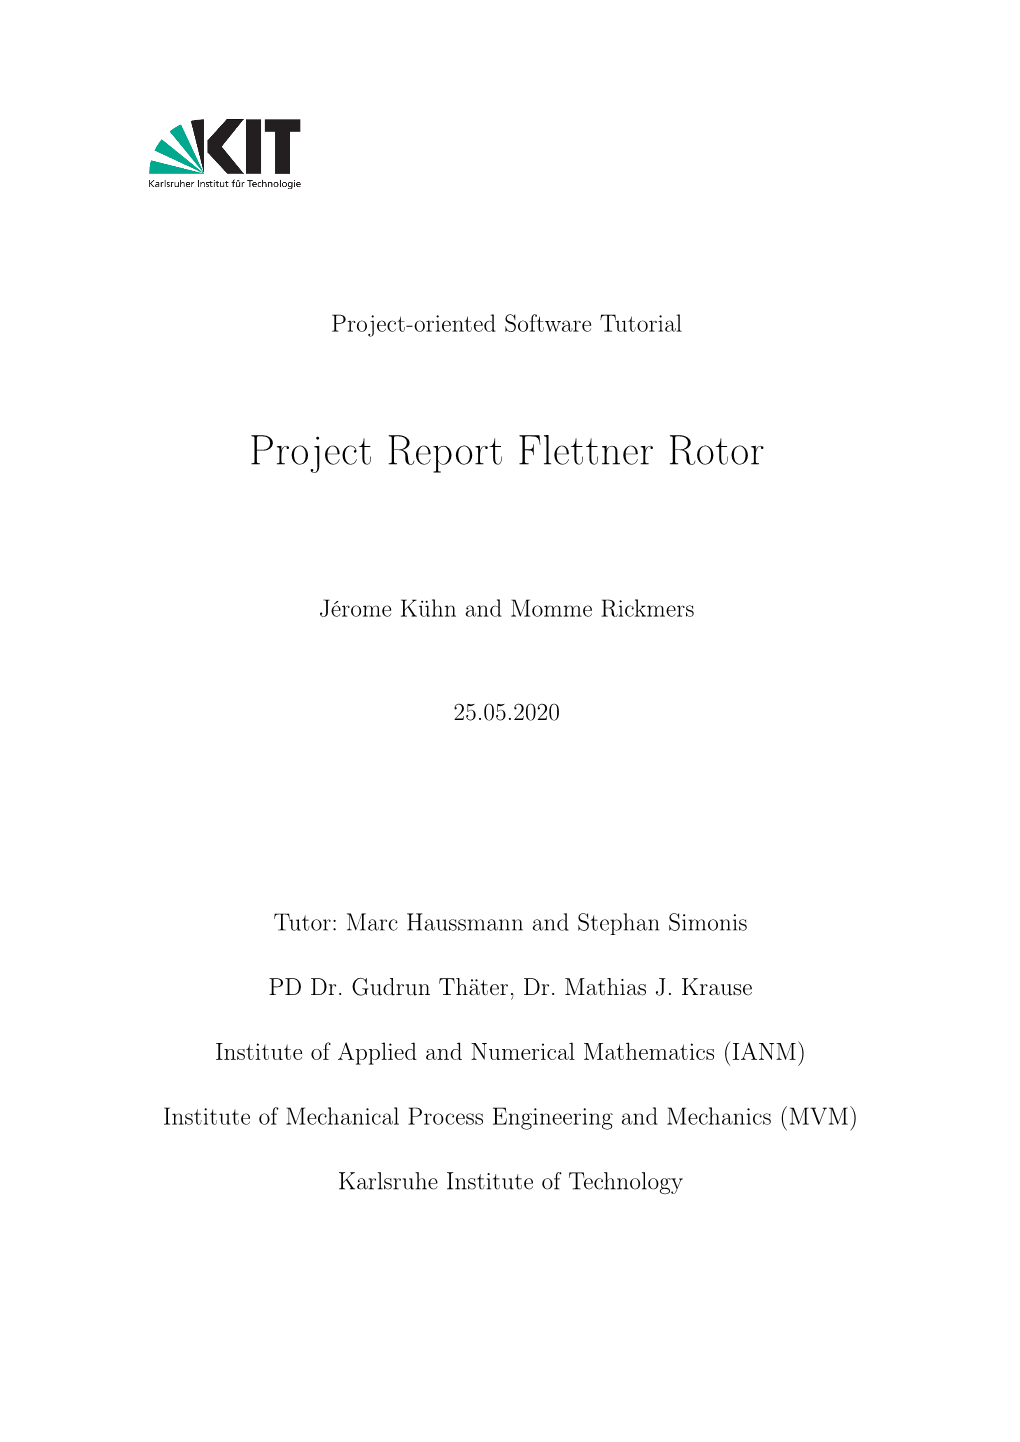 Project Report Flettner Rotor